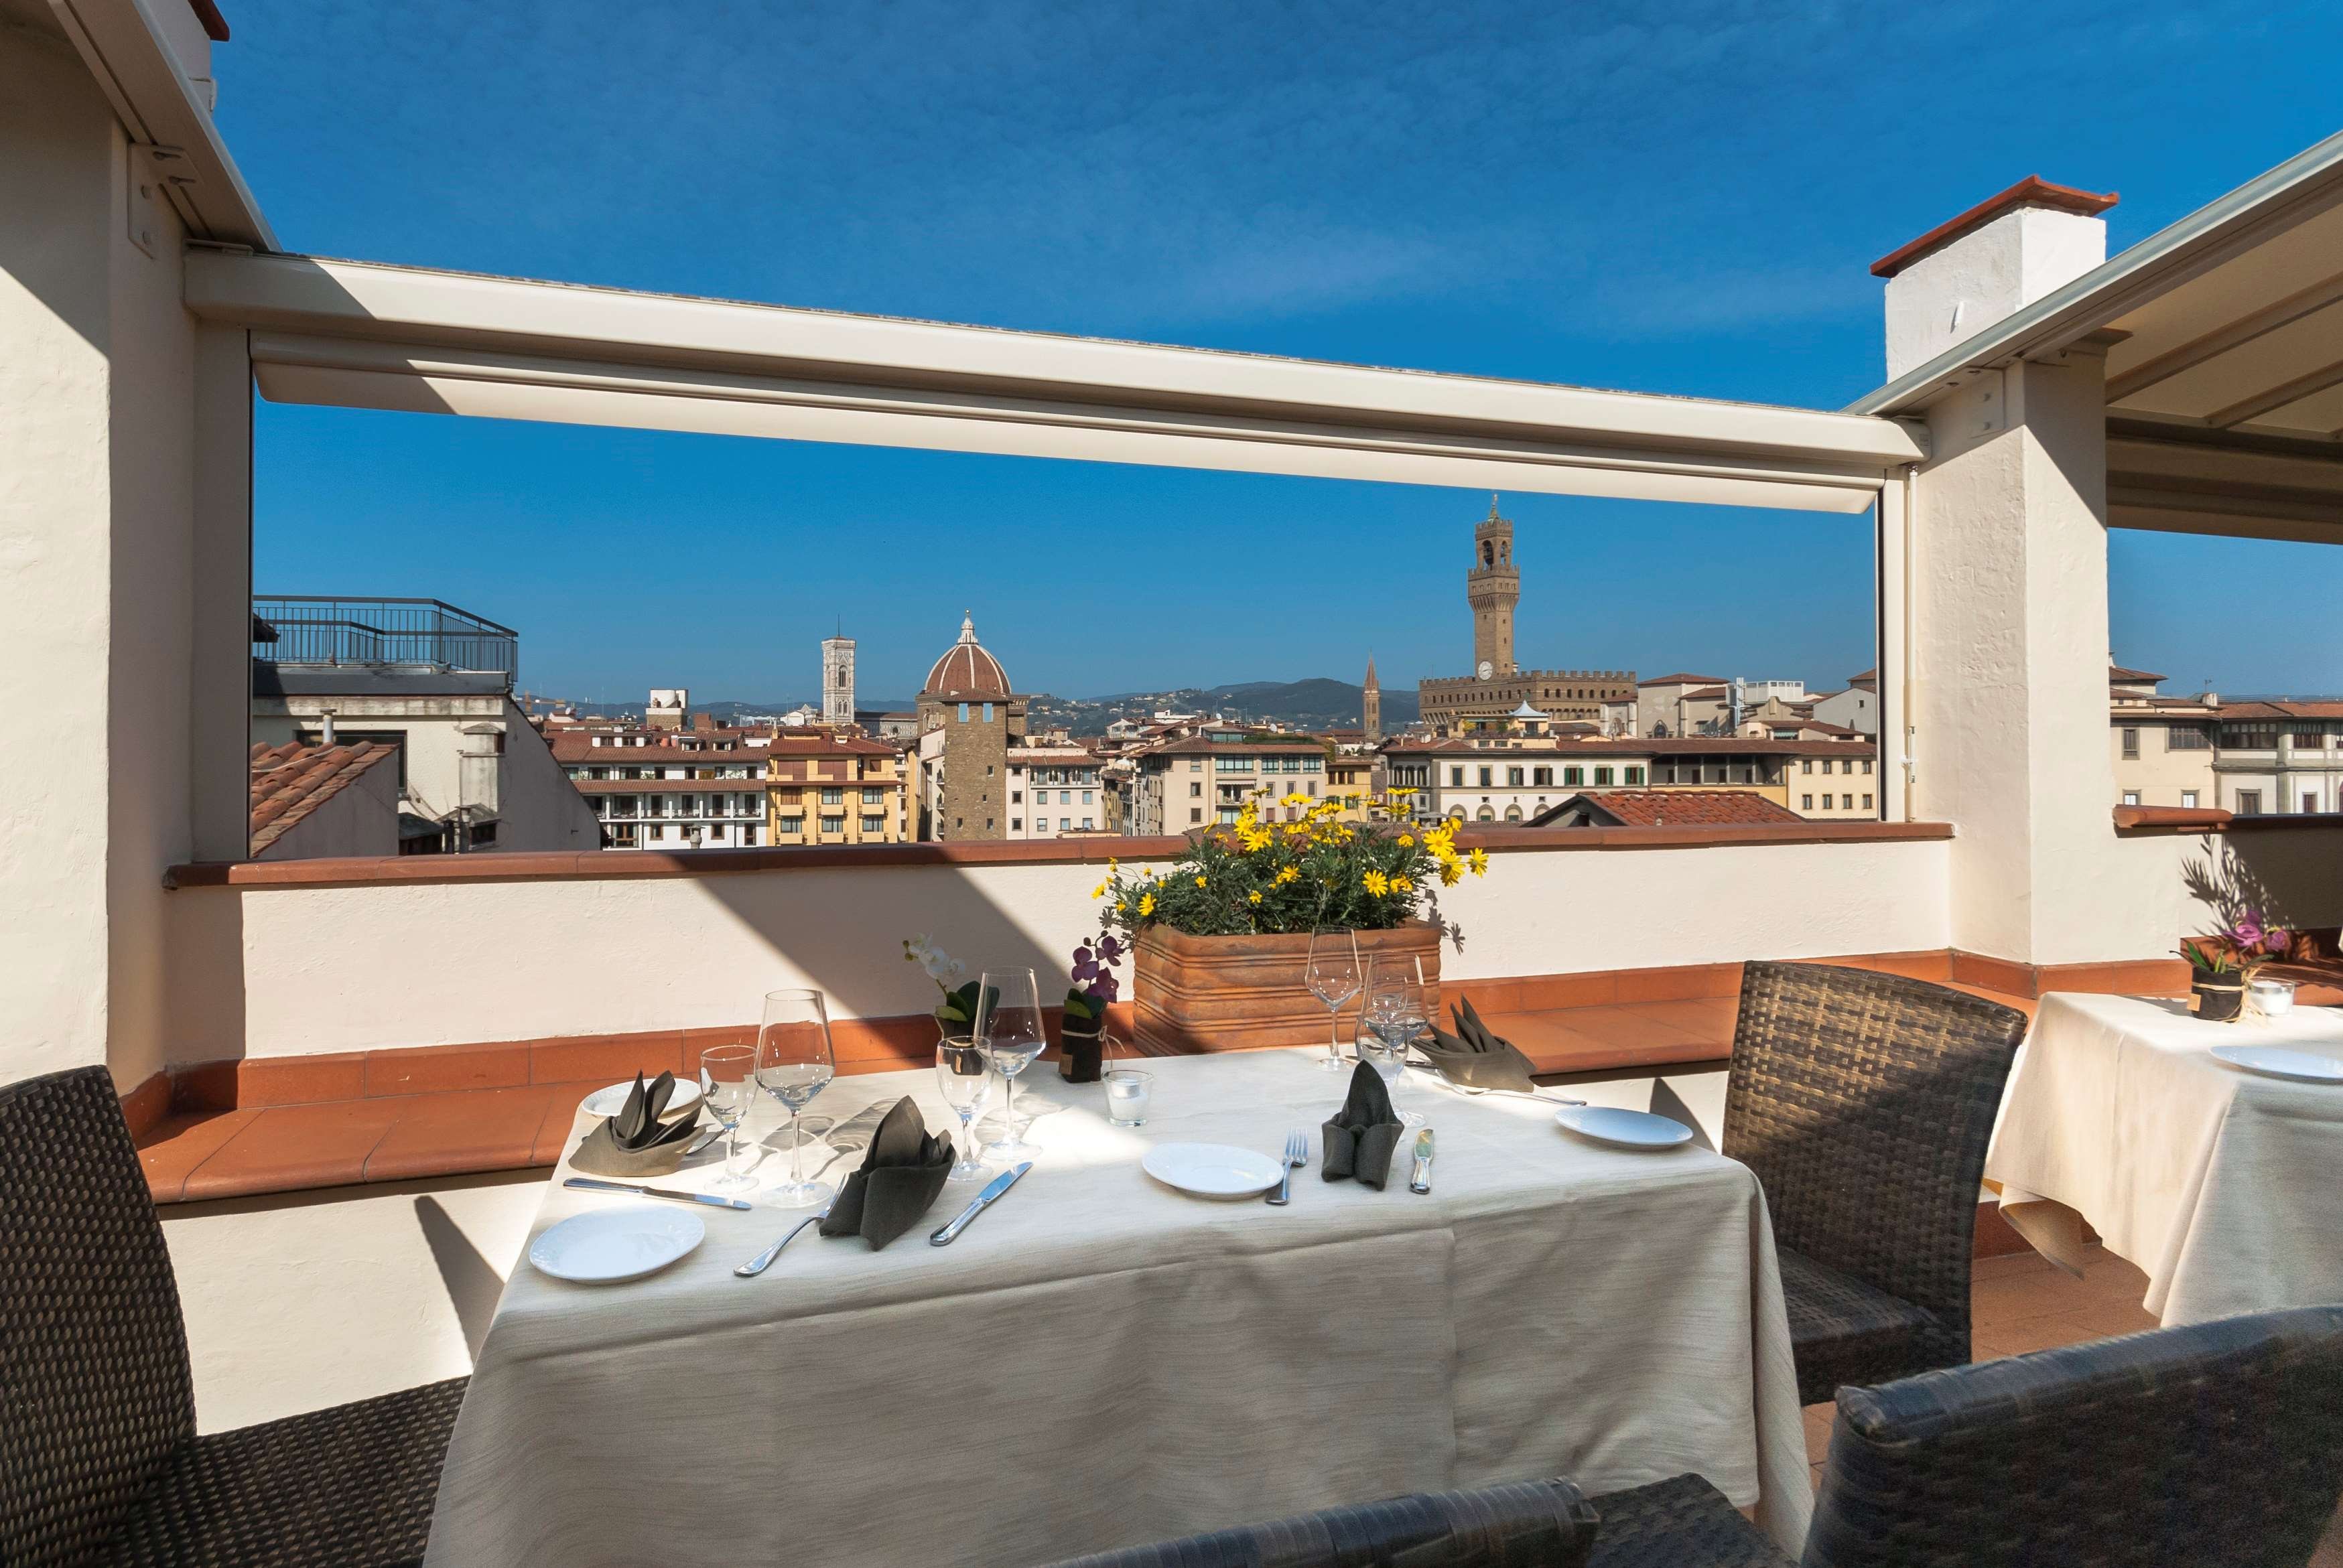 Hotel Pitti Palace al Ponte Vecchio image